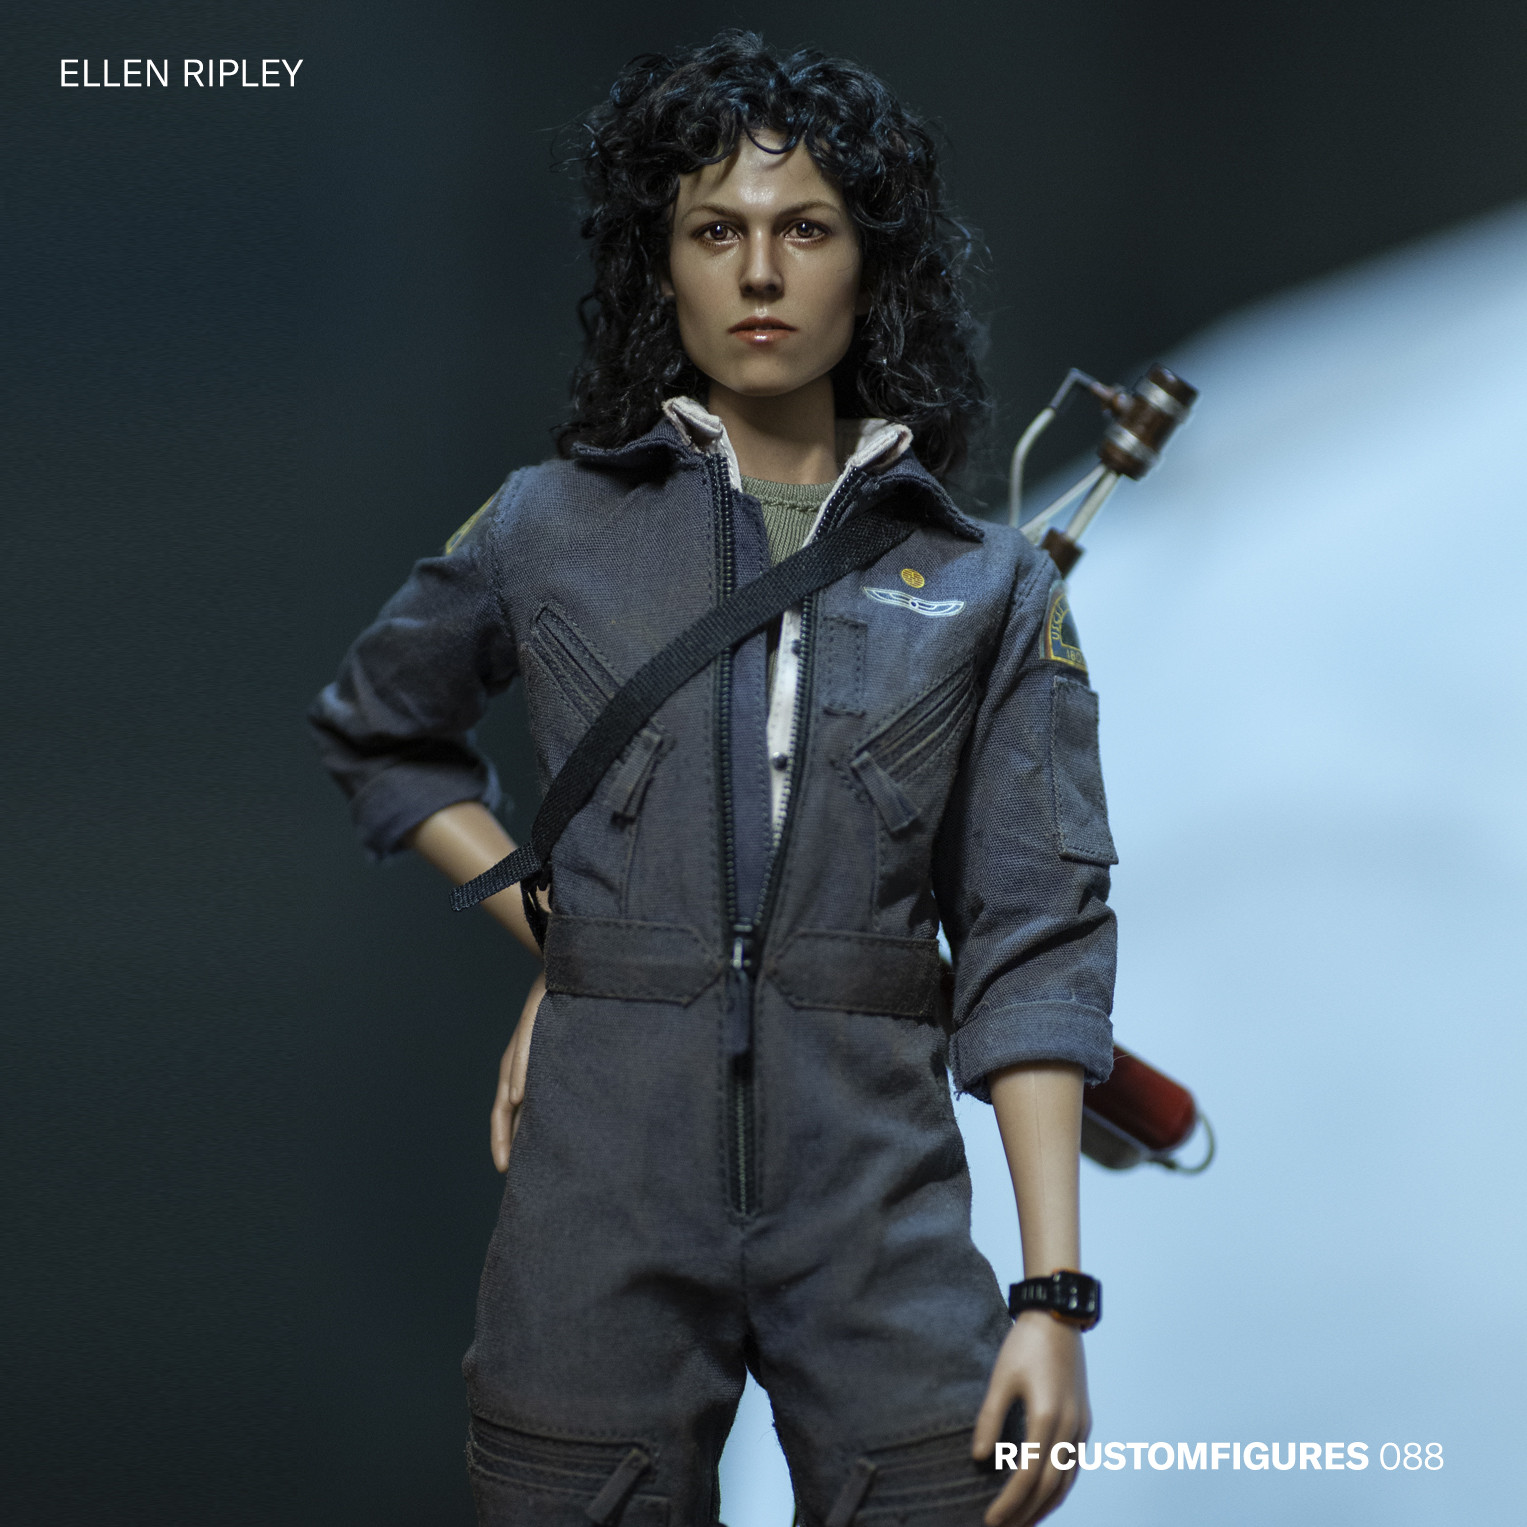 1/6 - 1/6 Hot Toys: Ellen Ripley - Alien - Collectible Figure